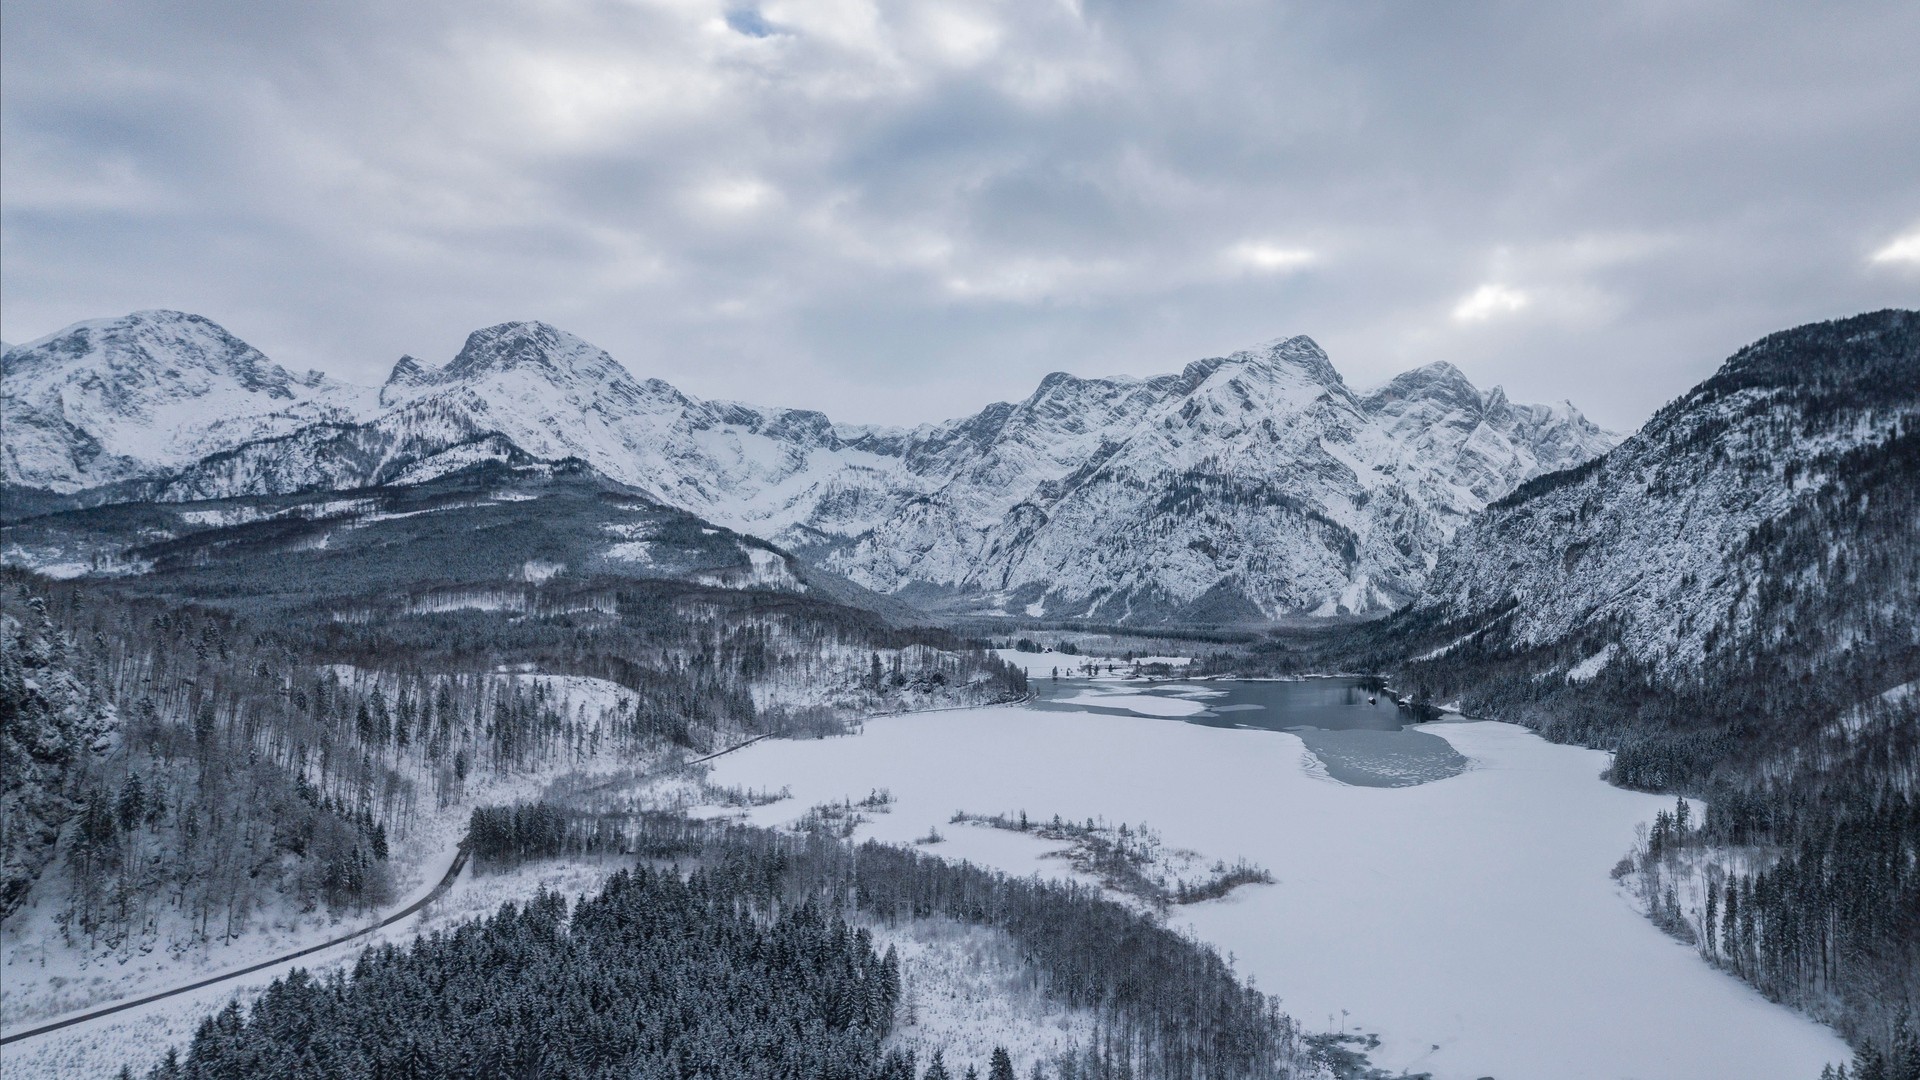 1920x1080 wallpapers: almsee, austria, mountains, winter, lake, stunning photo (image)